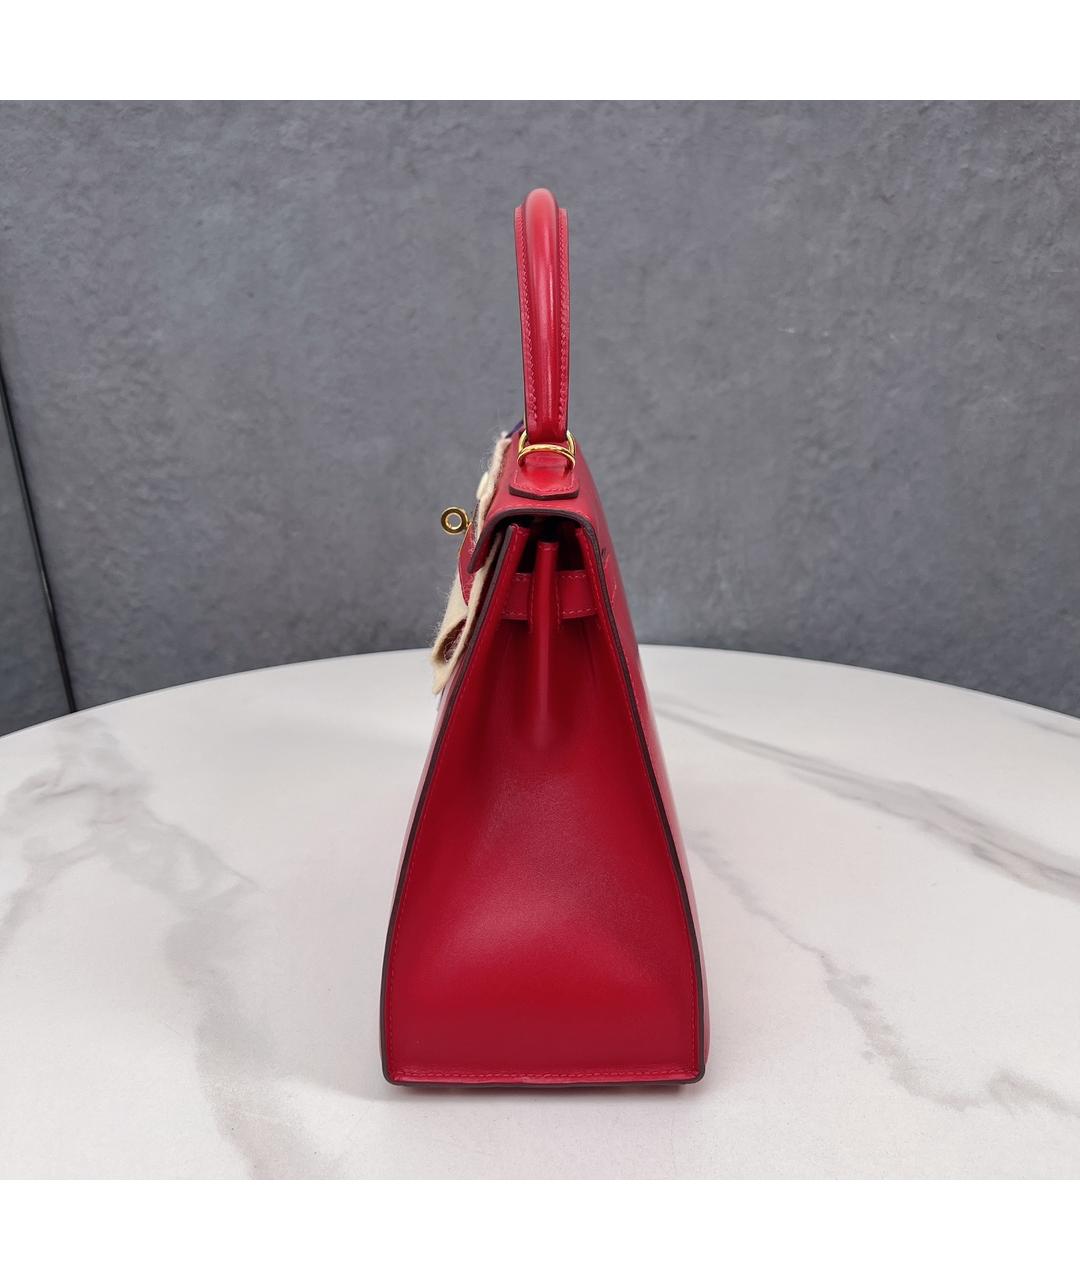 HERMES PRE-OWNED Красная кожаная сумка с короткими ручками, фото 3